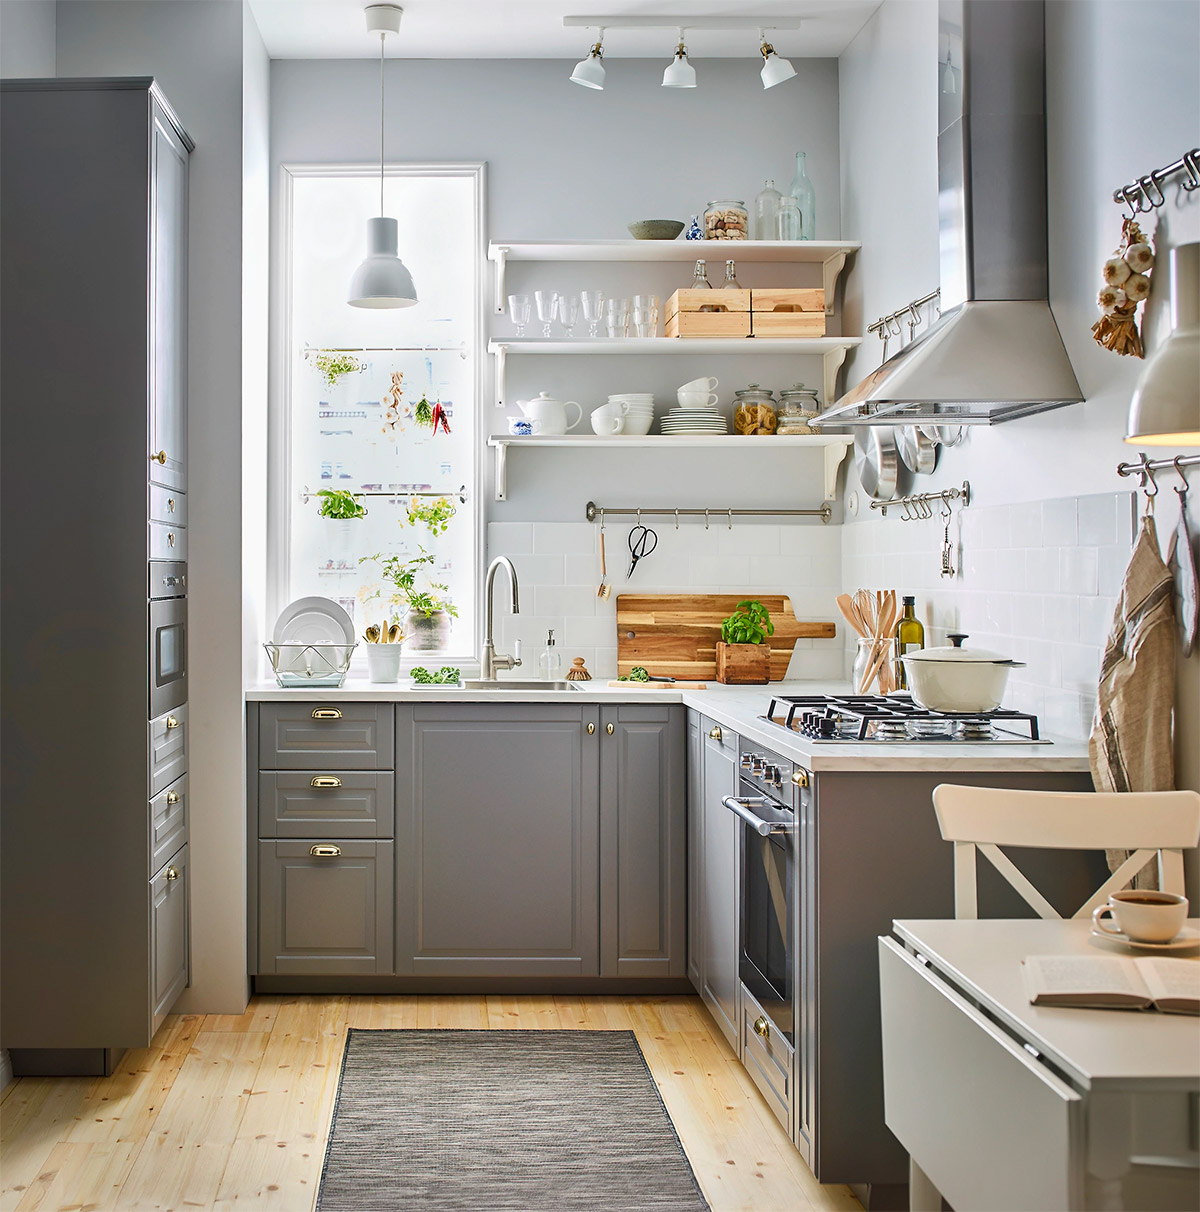 Plan a Small-Space Kitchen | HGTV